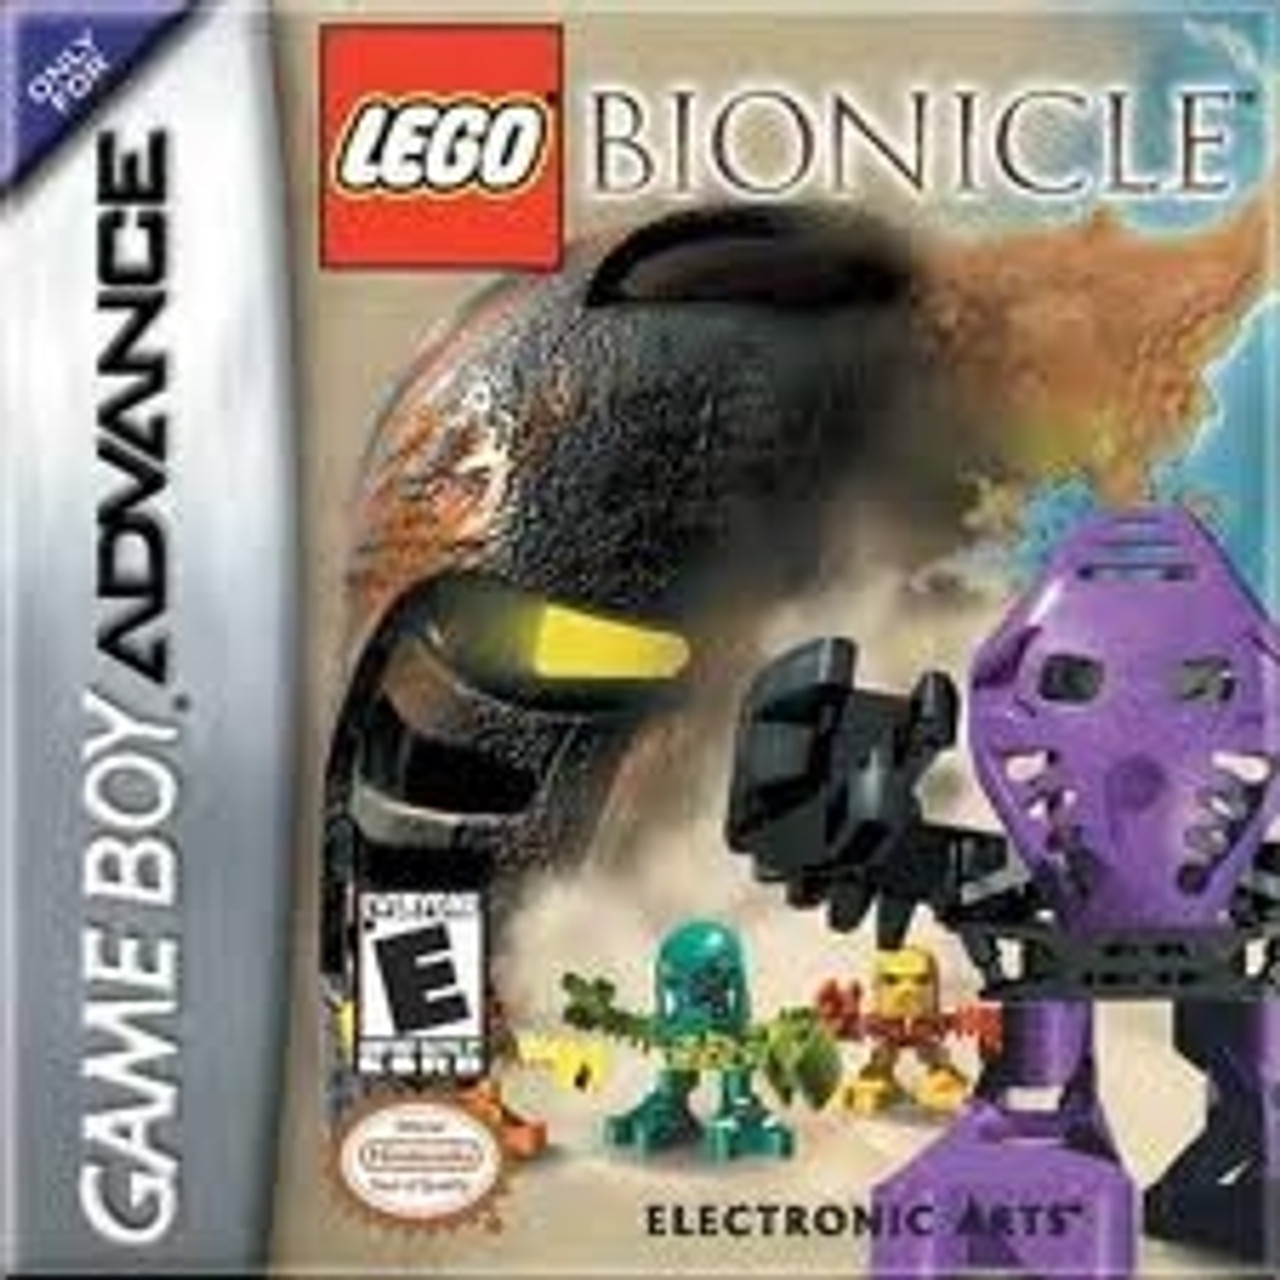 Lego Bionicle GameBoy Advance